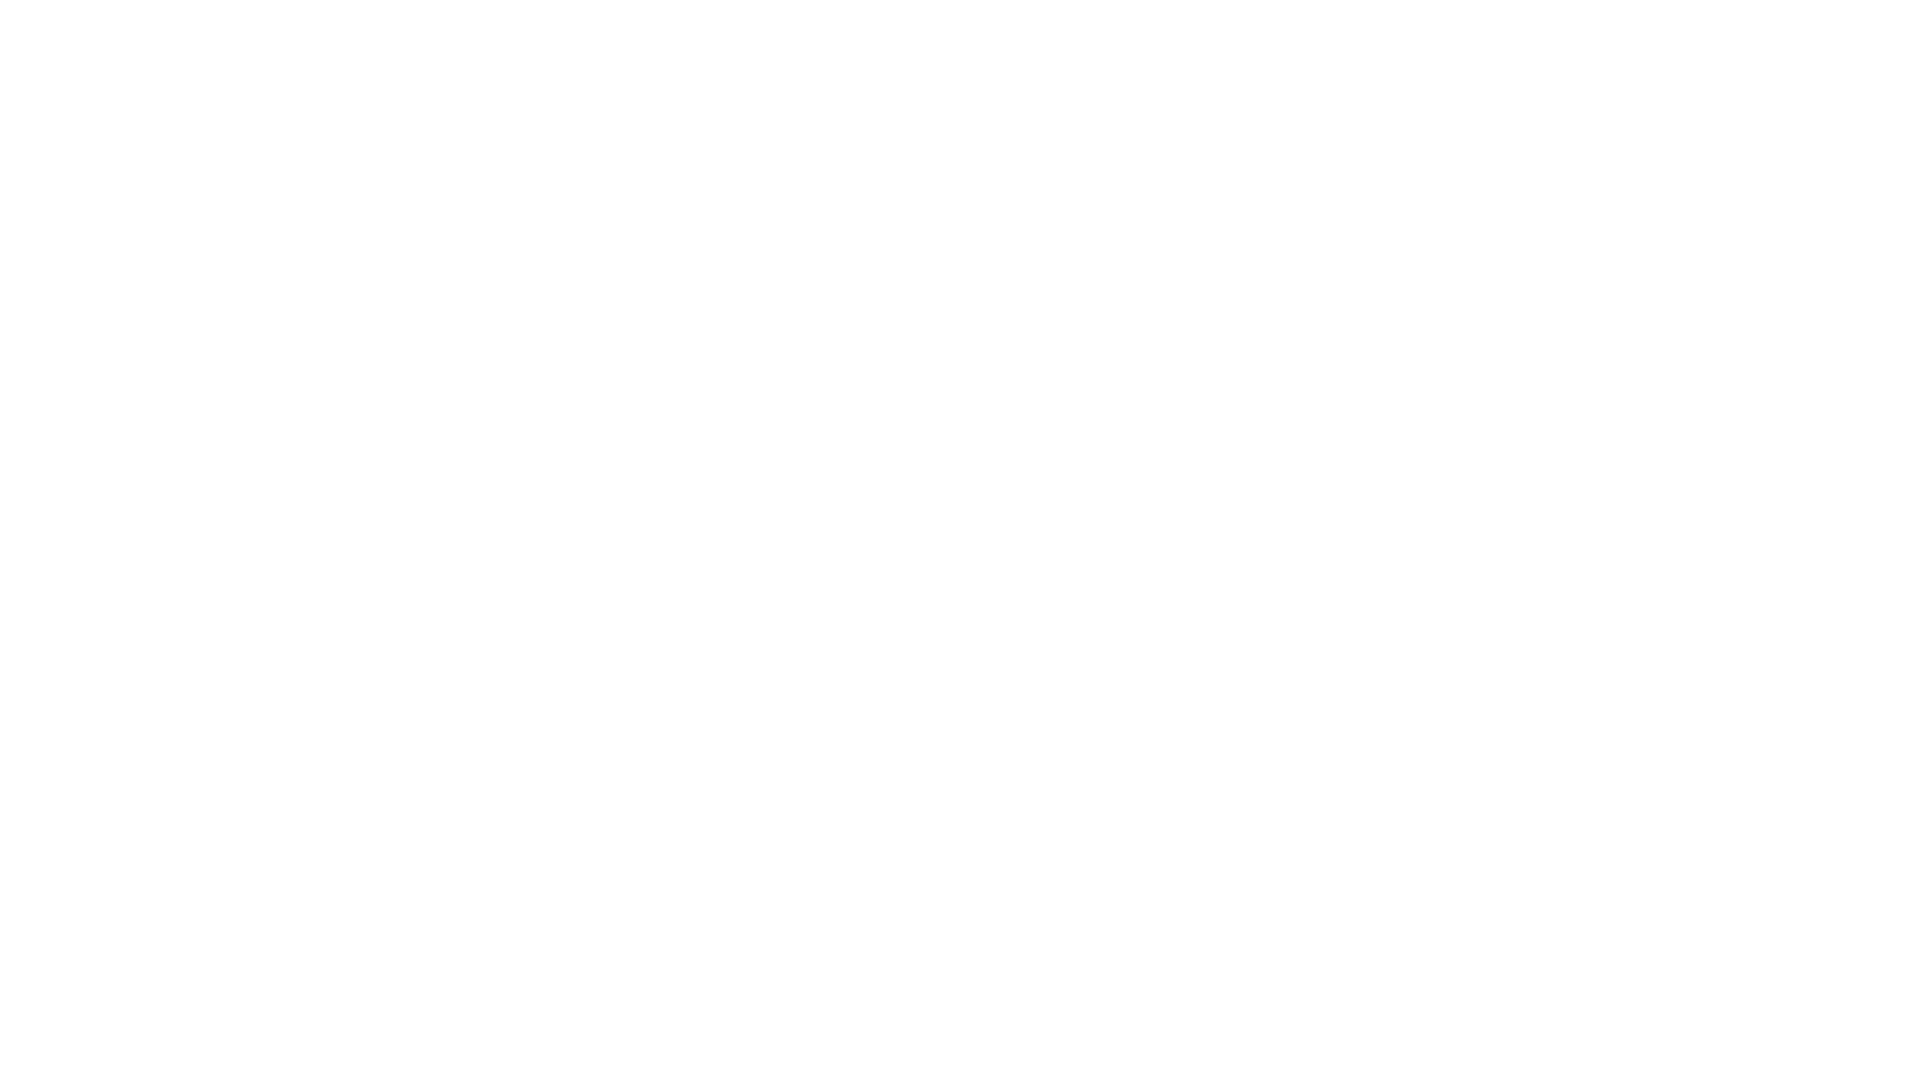 Amcham - ICC Brasil | Brasil pelo meio ambiente (BPMA))